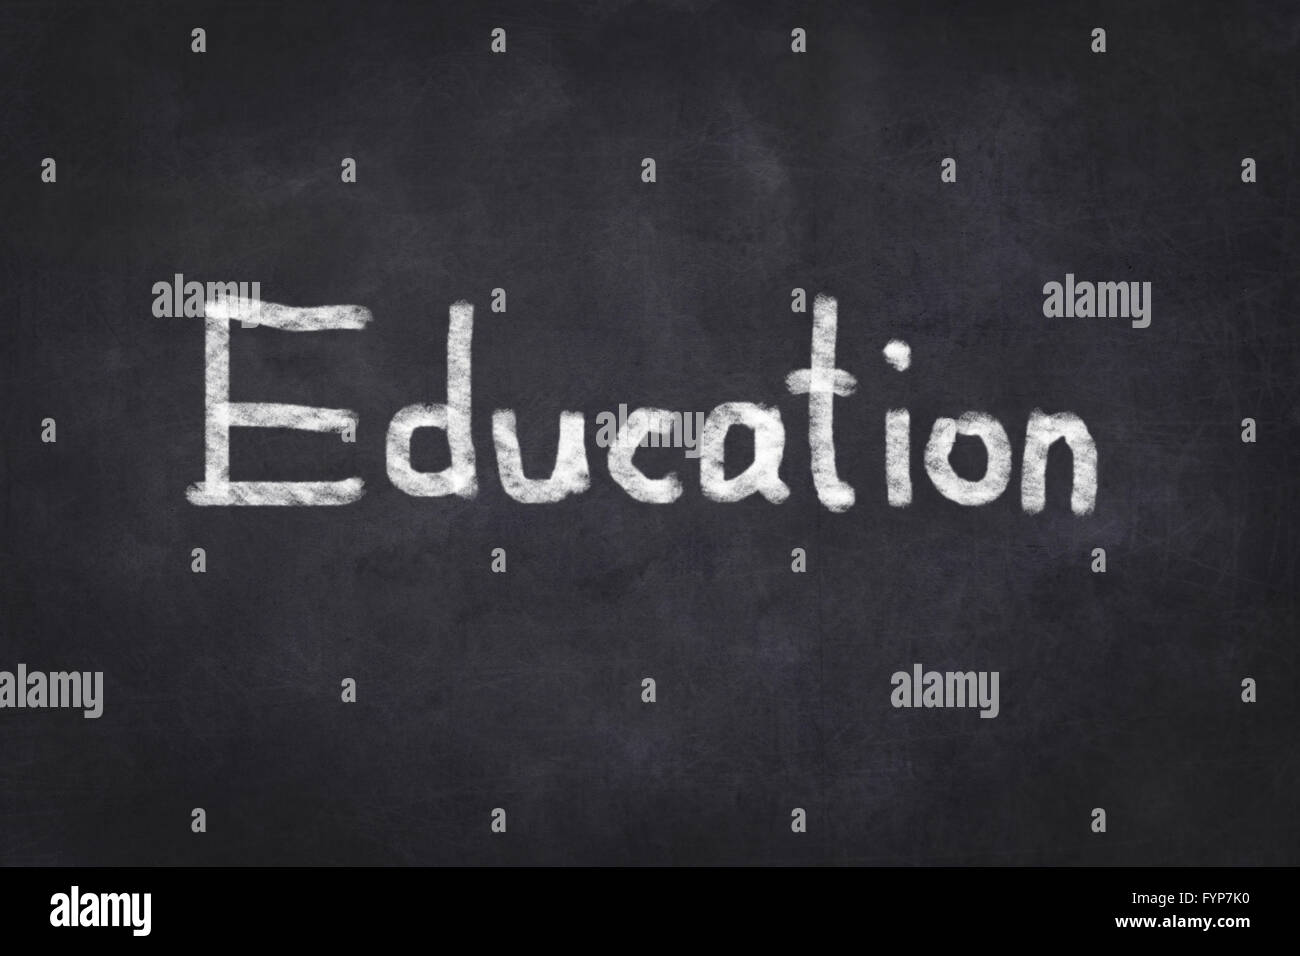 Education - text on black chalkboard Stock Photo